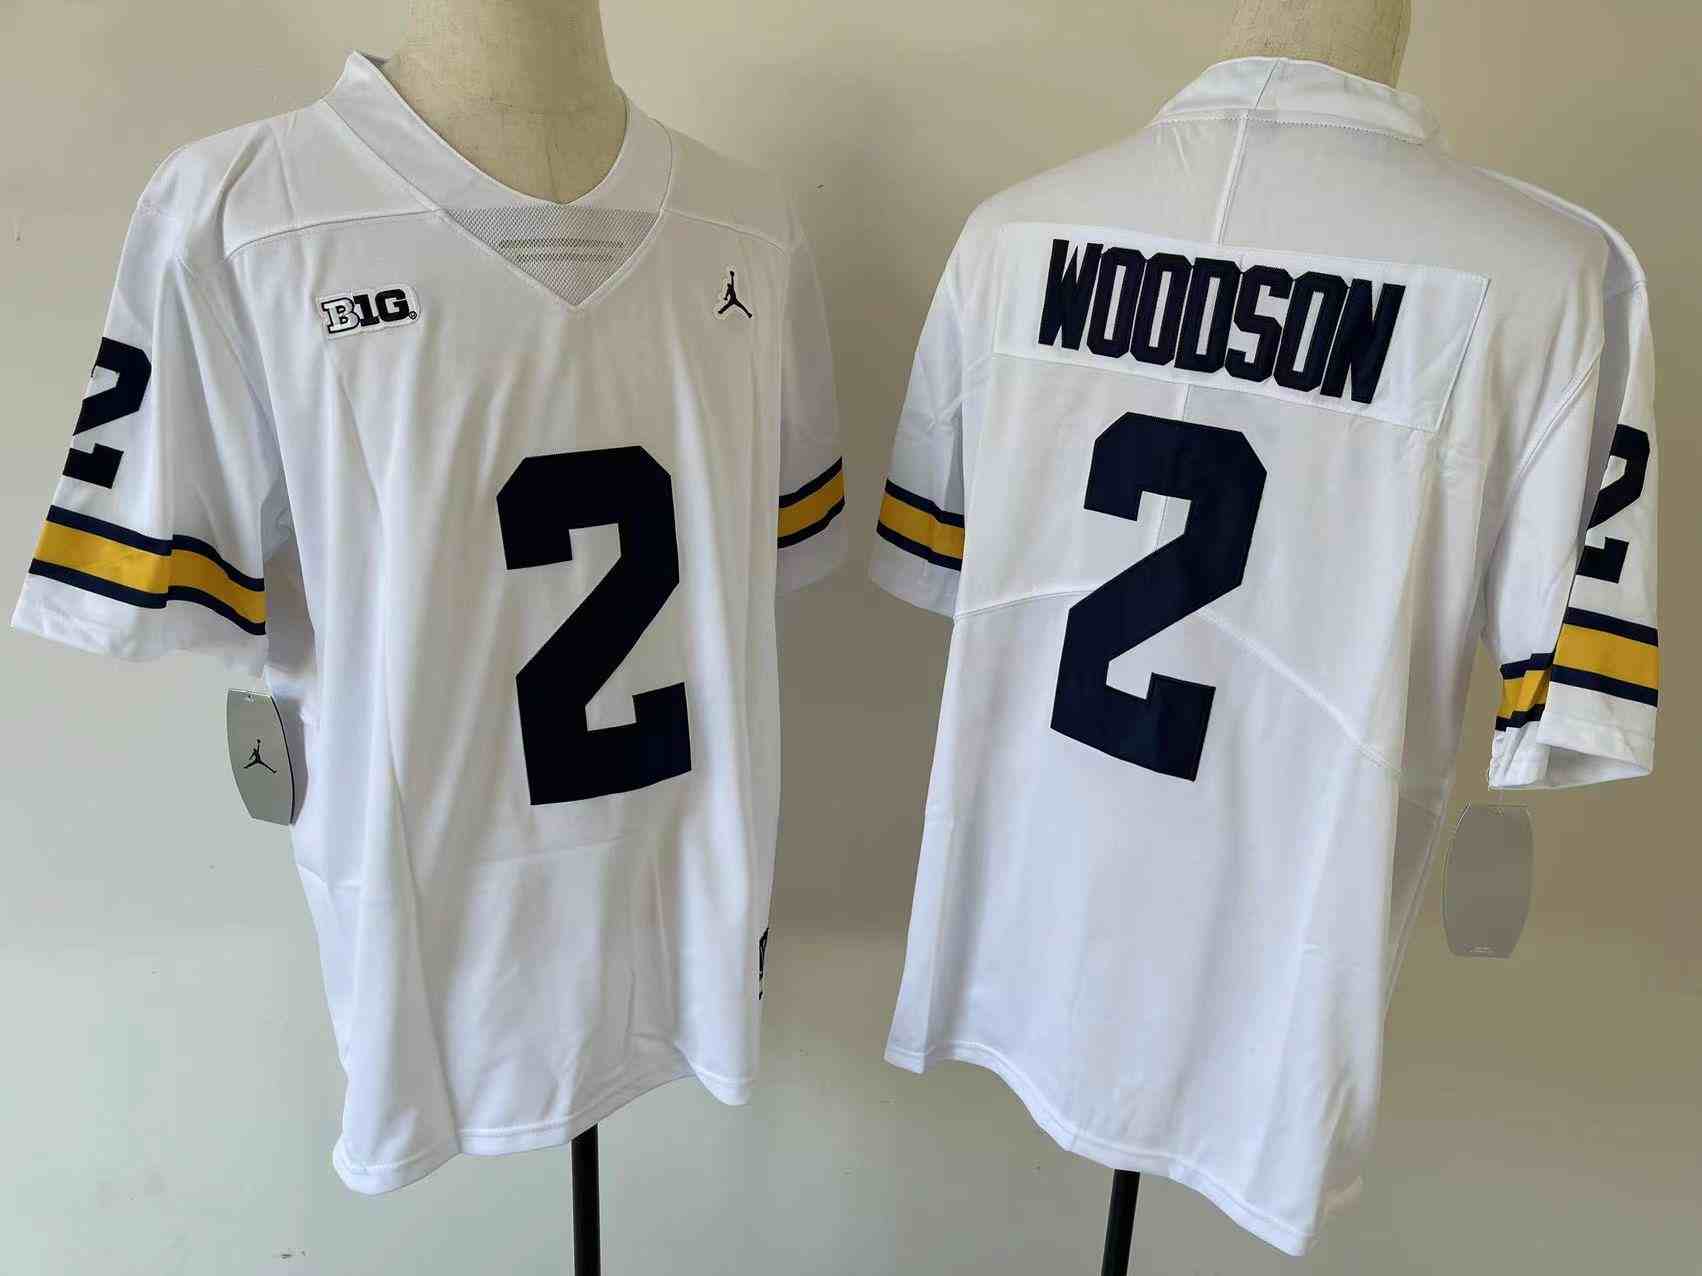 Youth Michigan Wolverines #2 WOODSON White Stitched Jersey